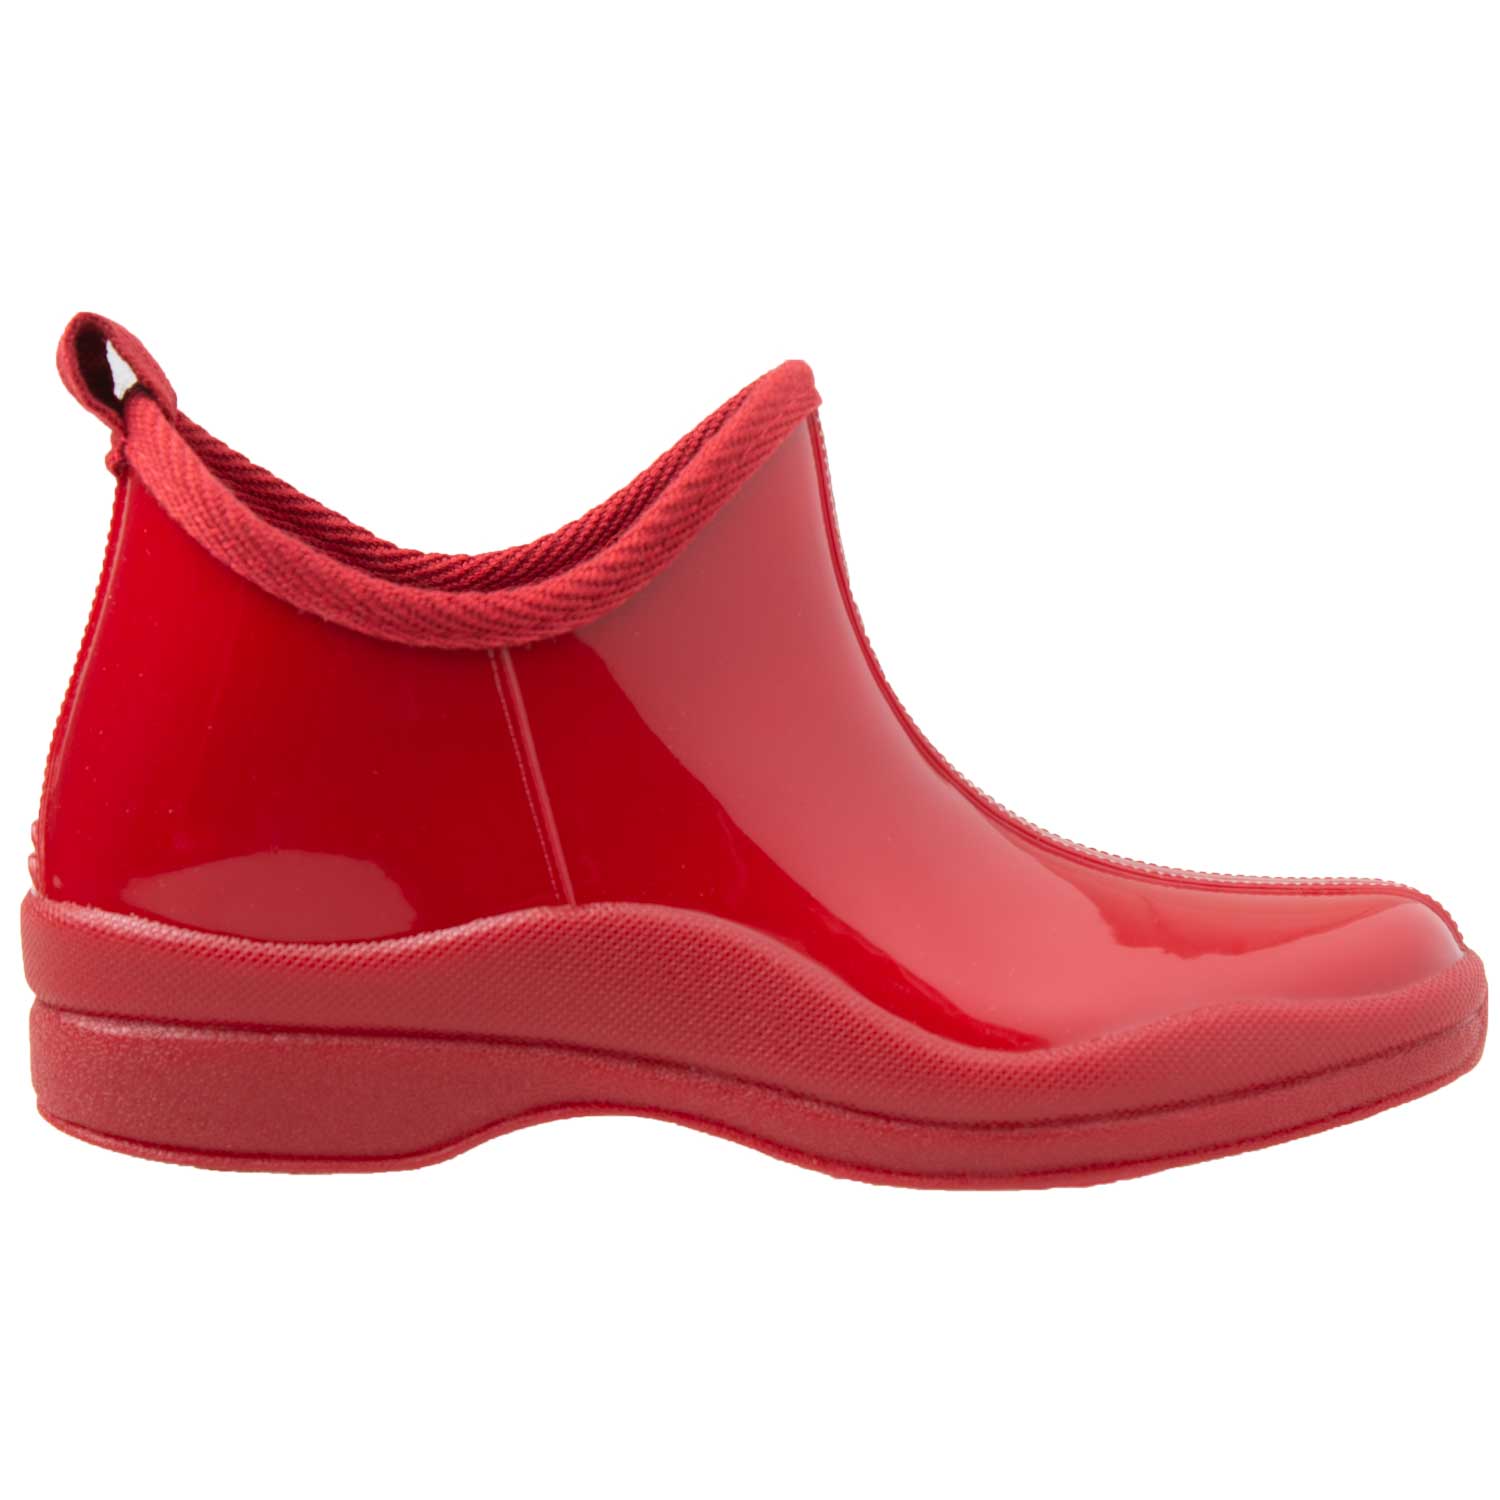 Simon Chang - Women's rubber rain booties, size 5